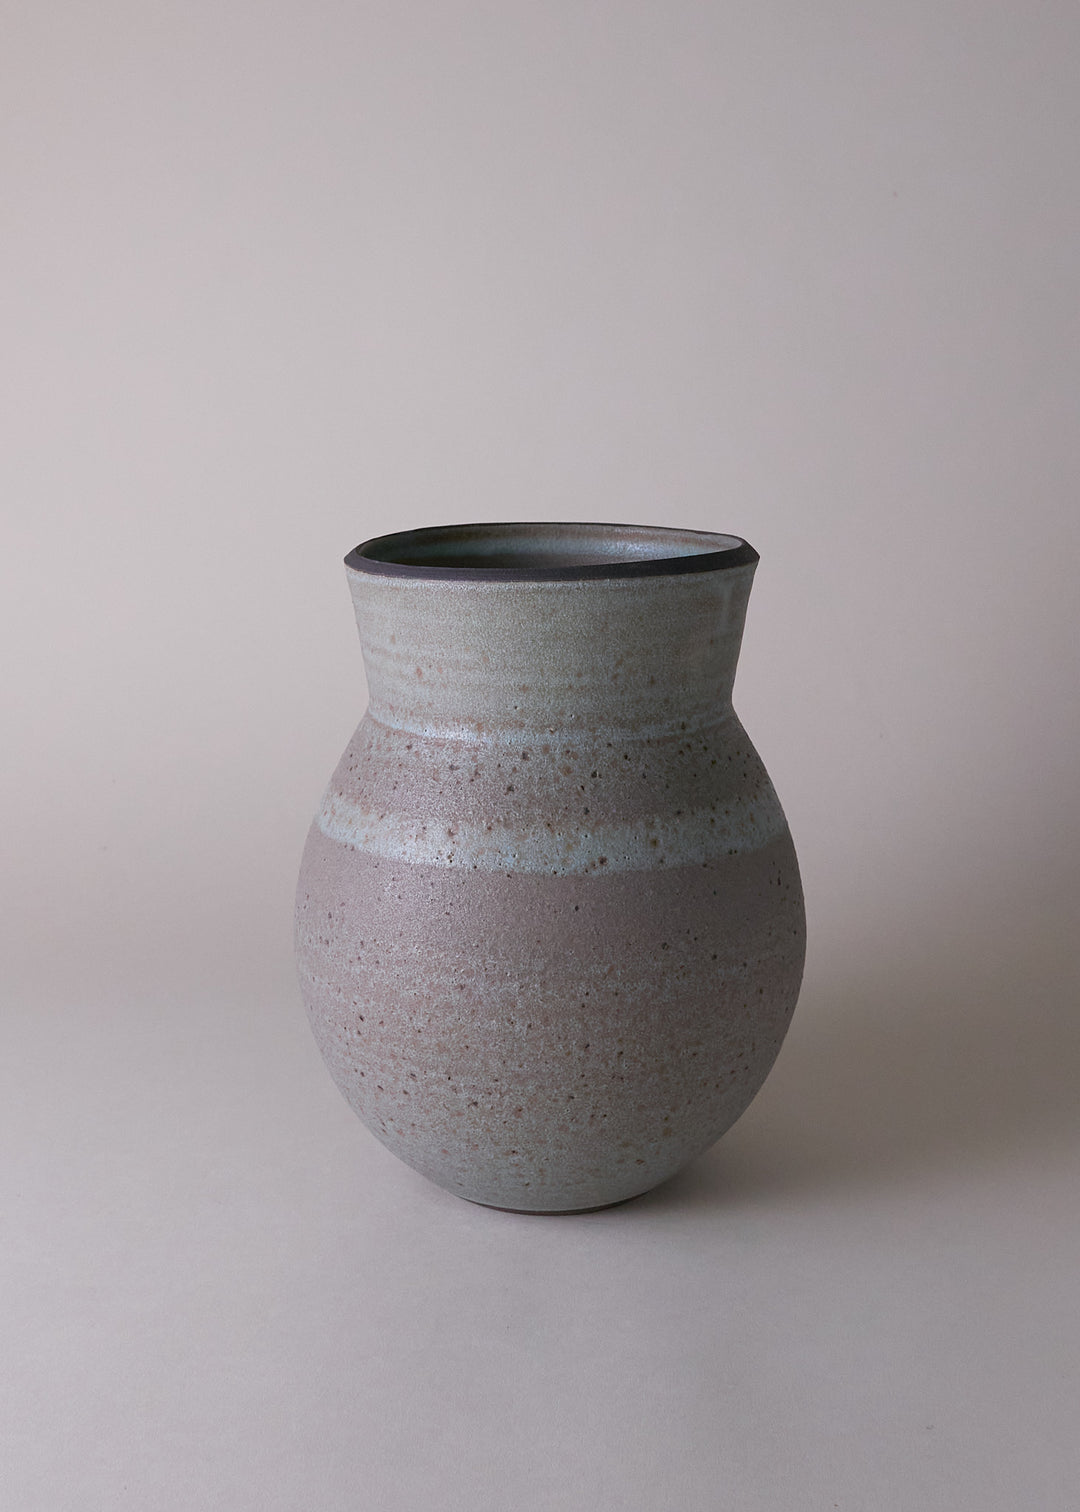 Deco Vase in Pool - Victoria Morris Pottery